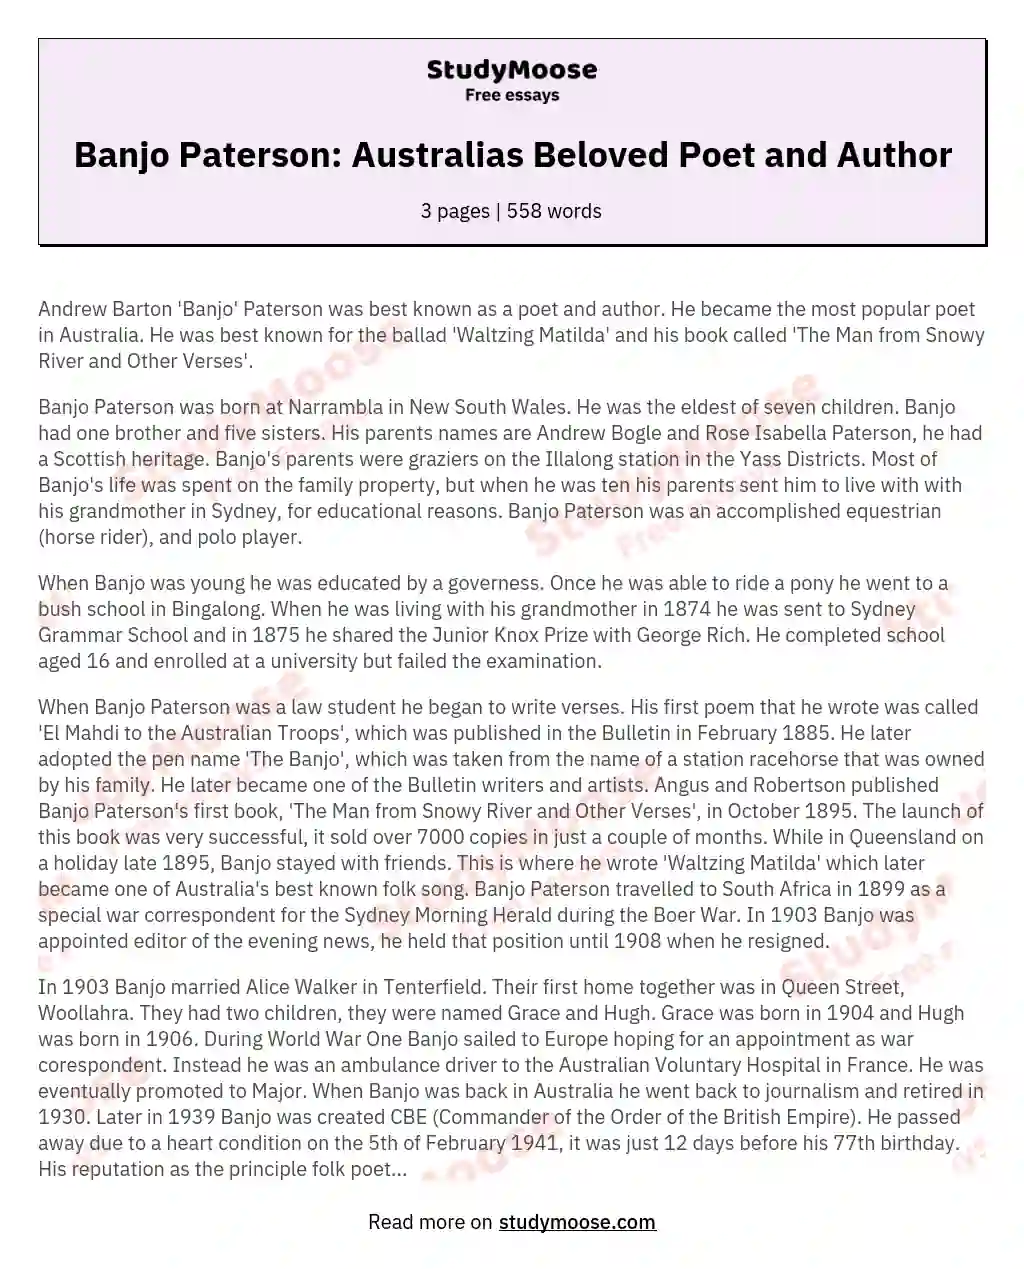 Banjo Paterson: Australias Beloved Poet and Author essay